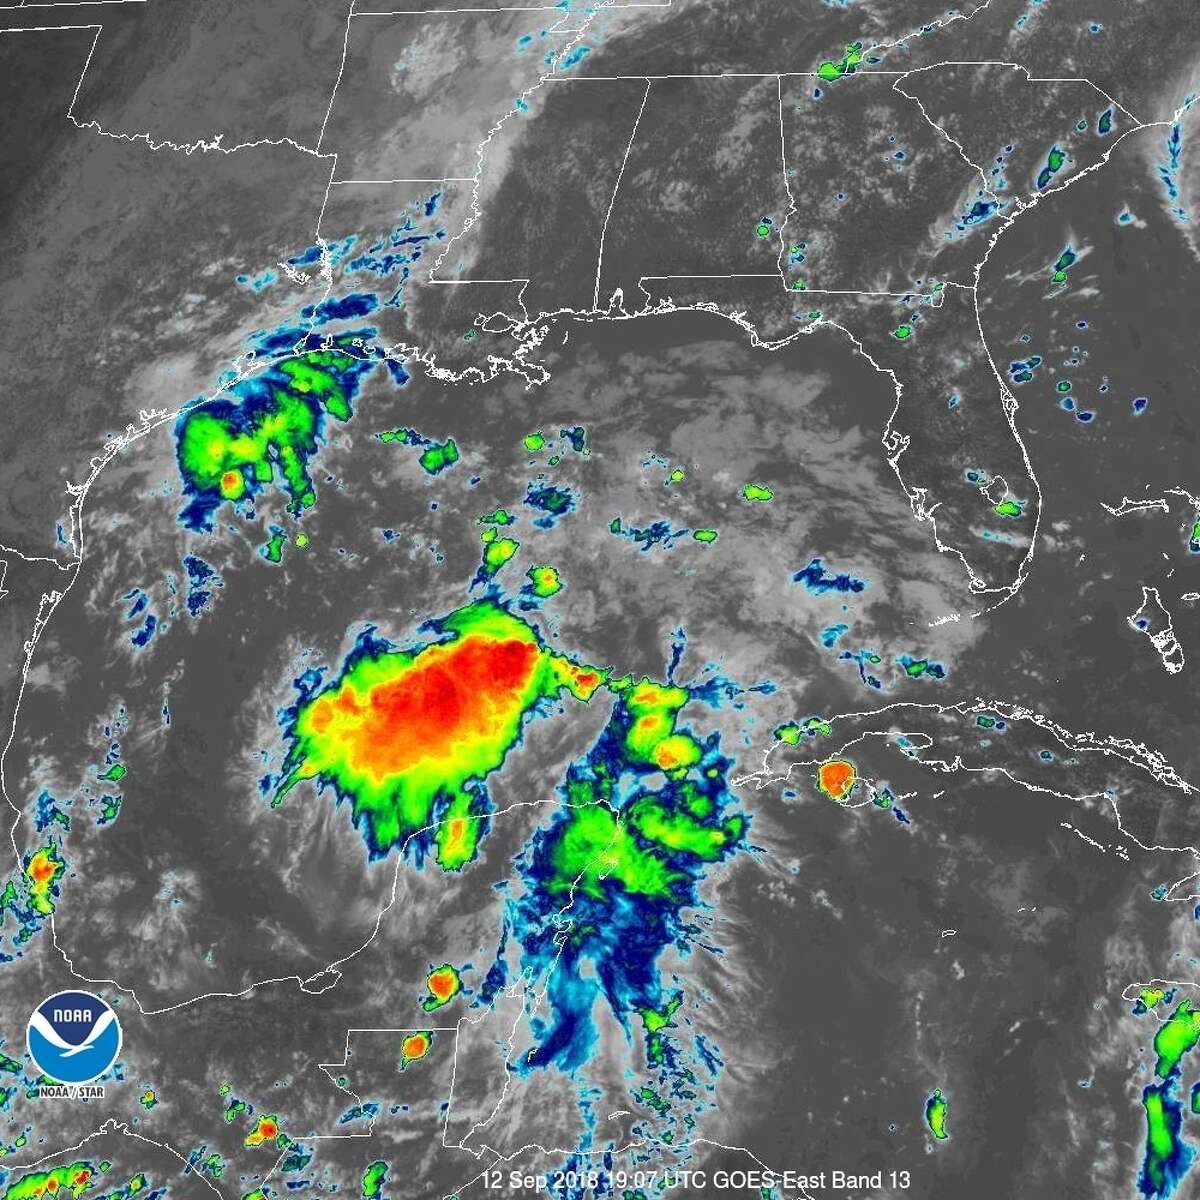 Storm in Gulf bringing heavy rain, flooding to Texas coast